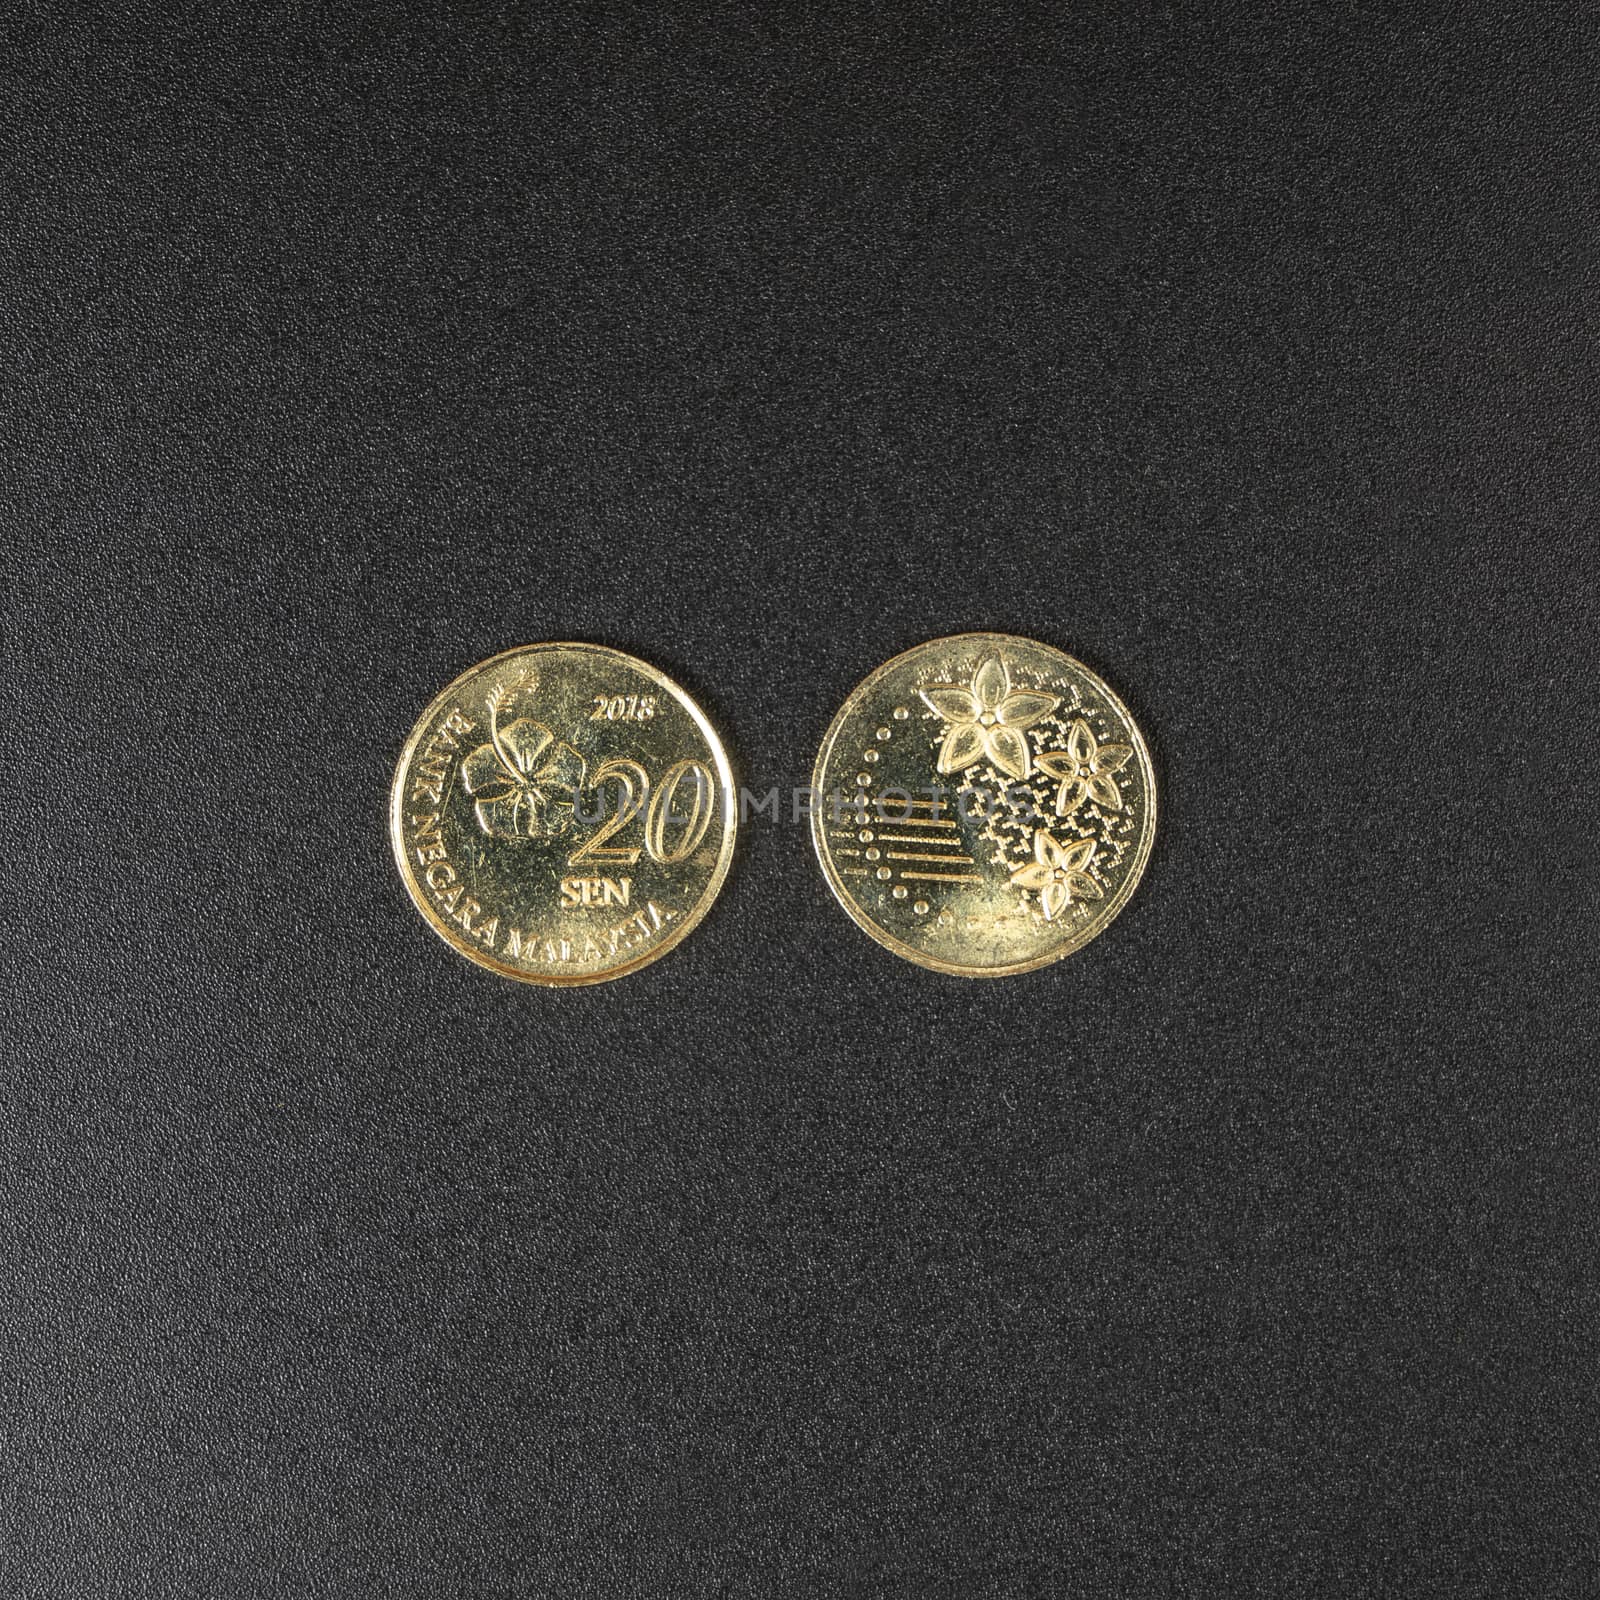 A 20 Sen coin of Malaysian Ringgit